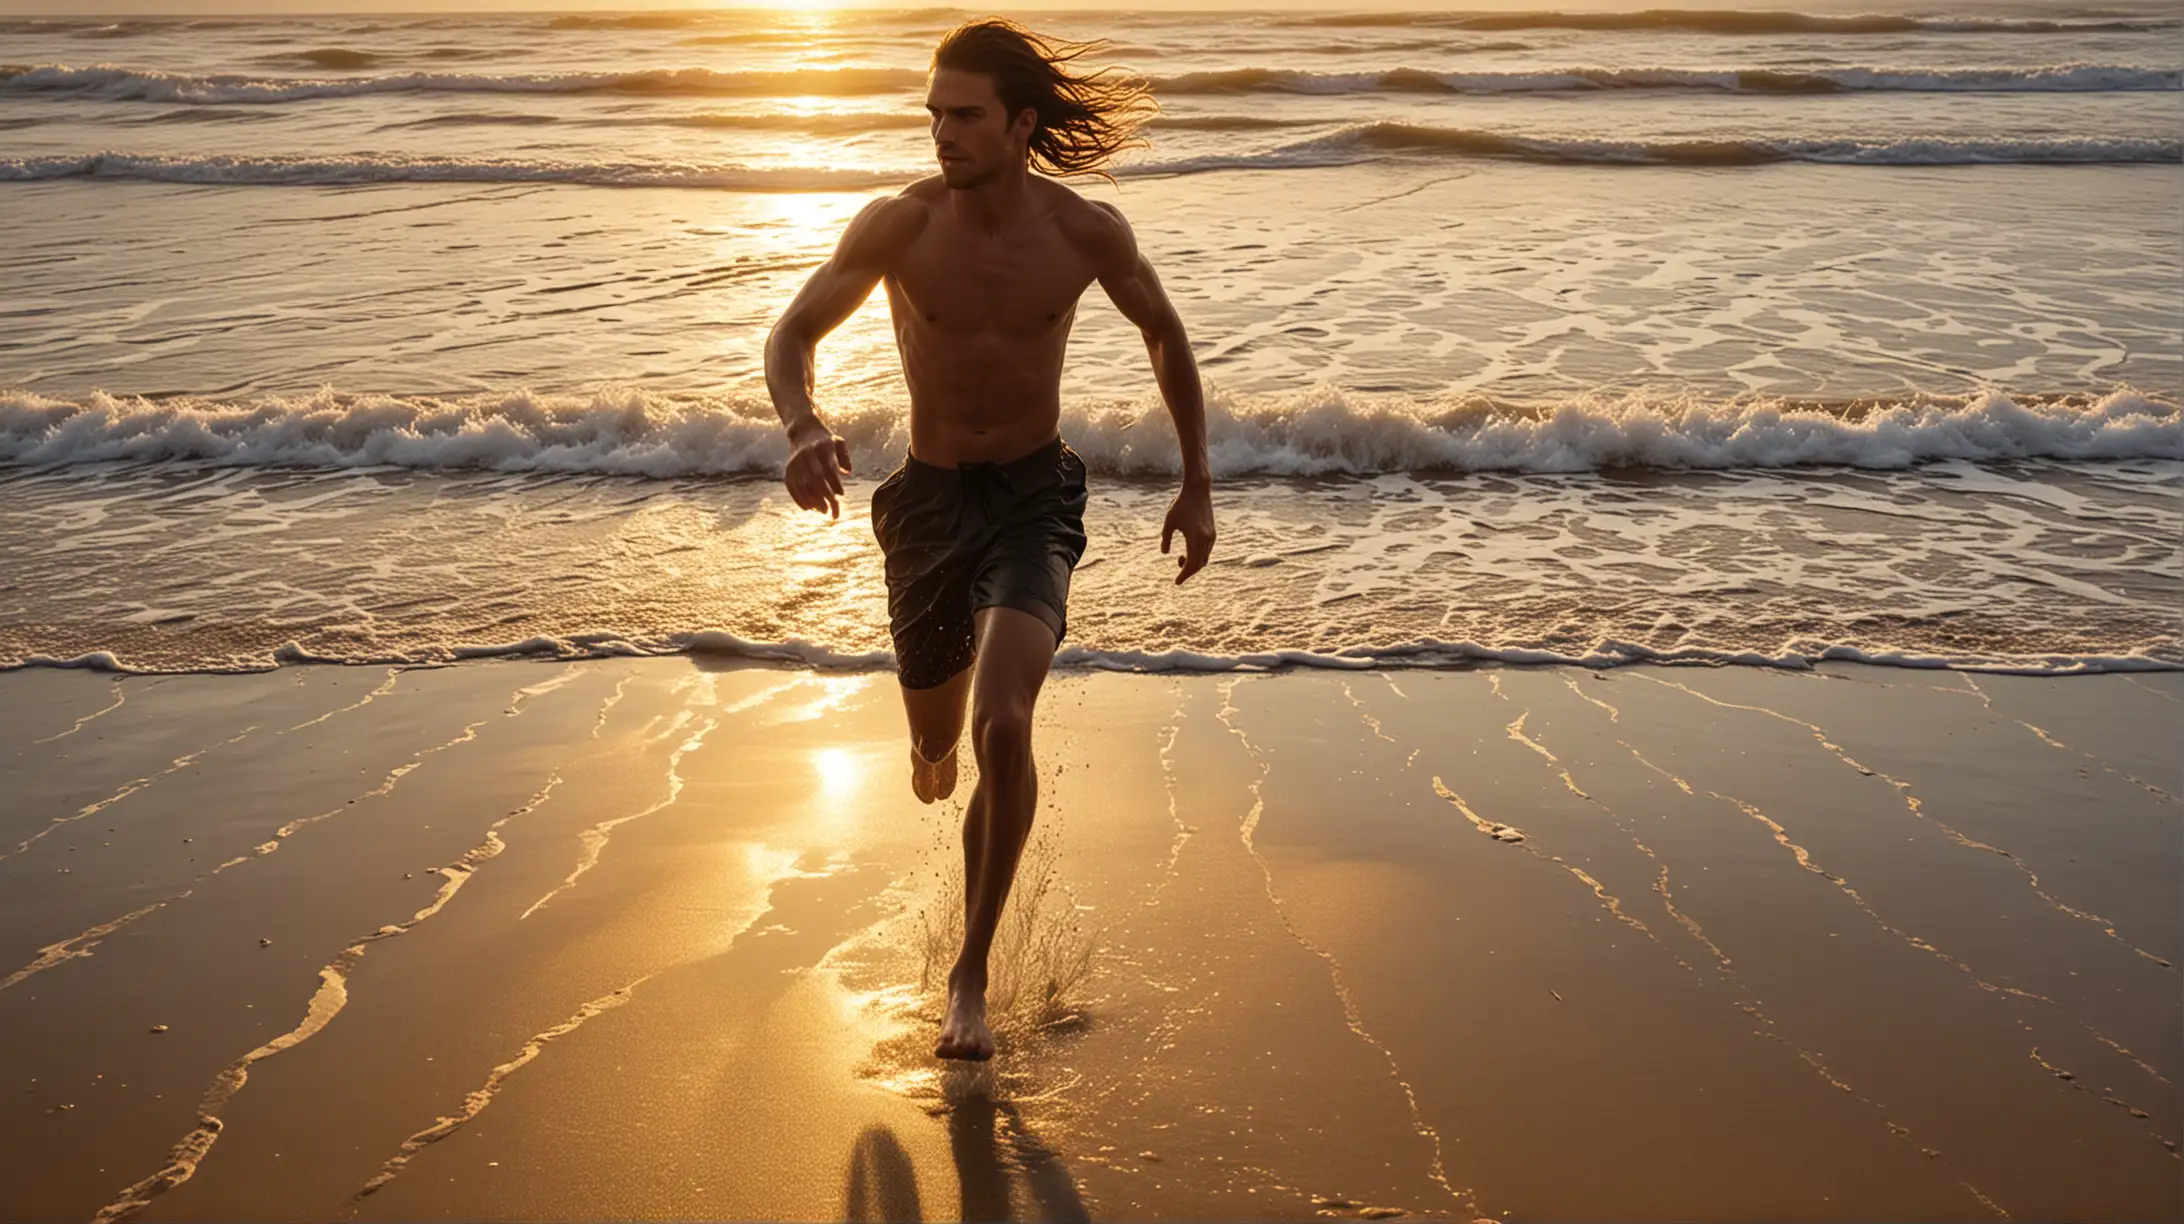 Energetic Beach Run in Rainstorm Dynamic Illustration of a Young Man Splashing Through Waves